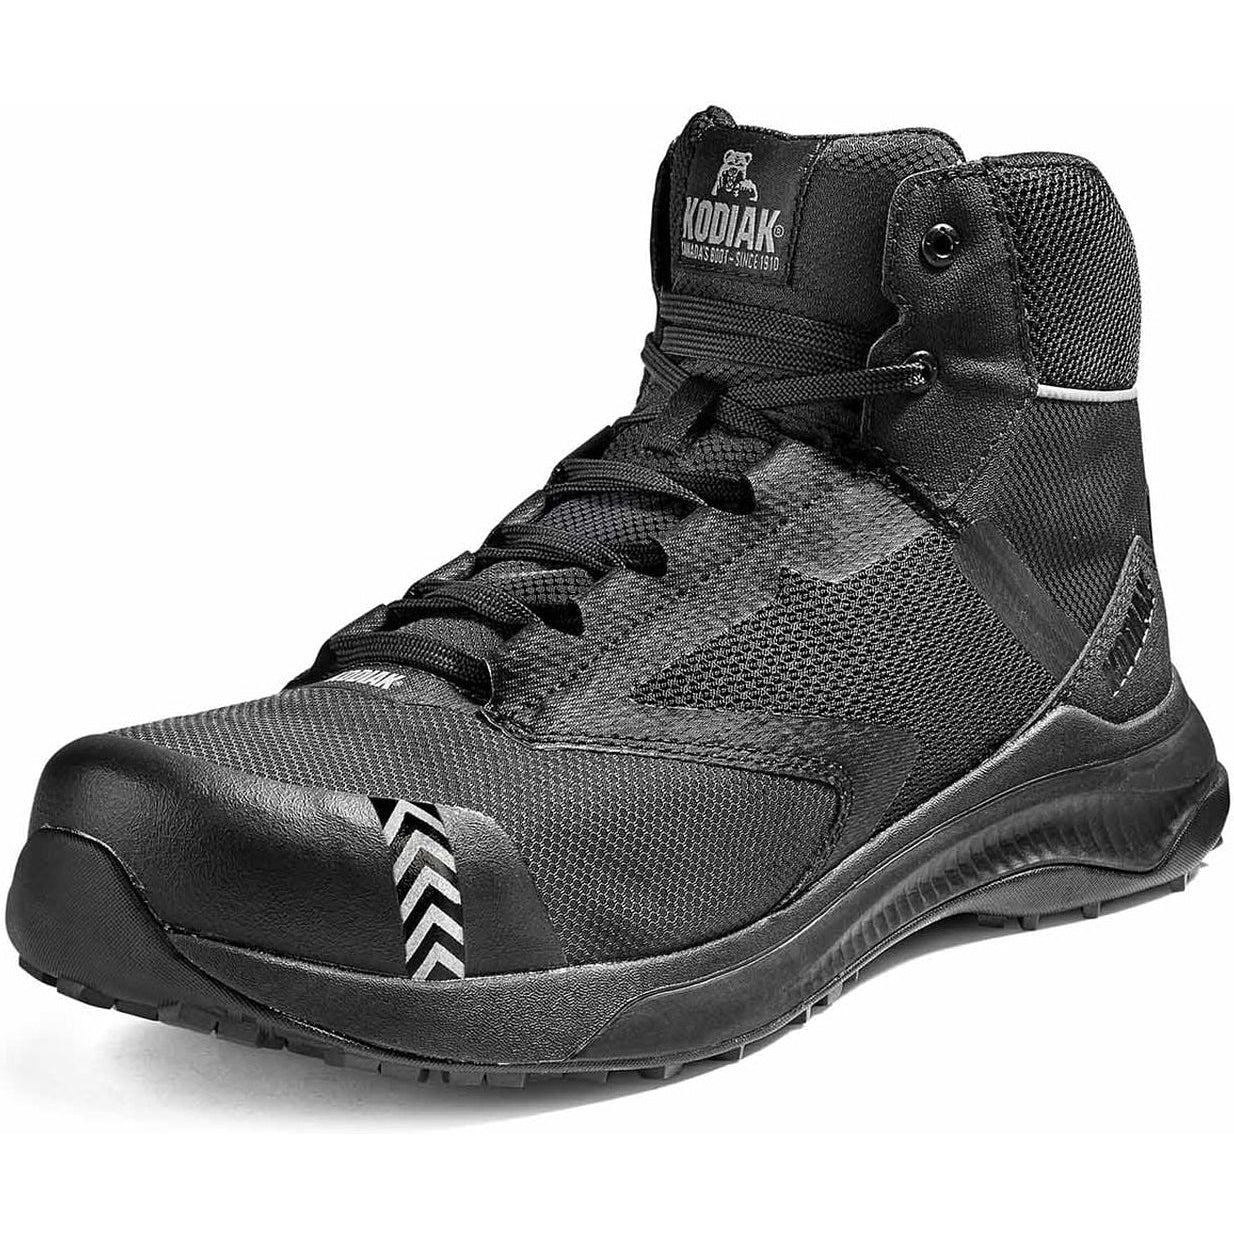 Kodiak Men's Quicktrail Mid CT Athletic Safety Work Shoe -Black- 4THQBK  - Overlook Boots